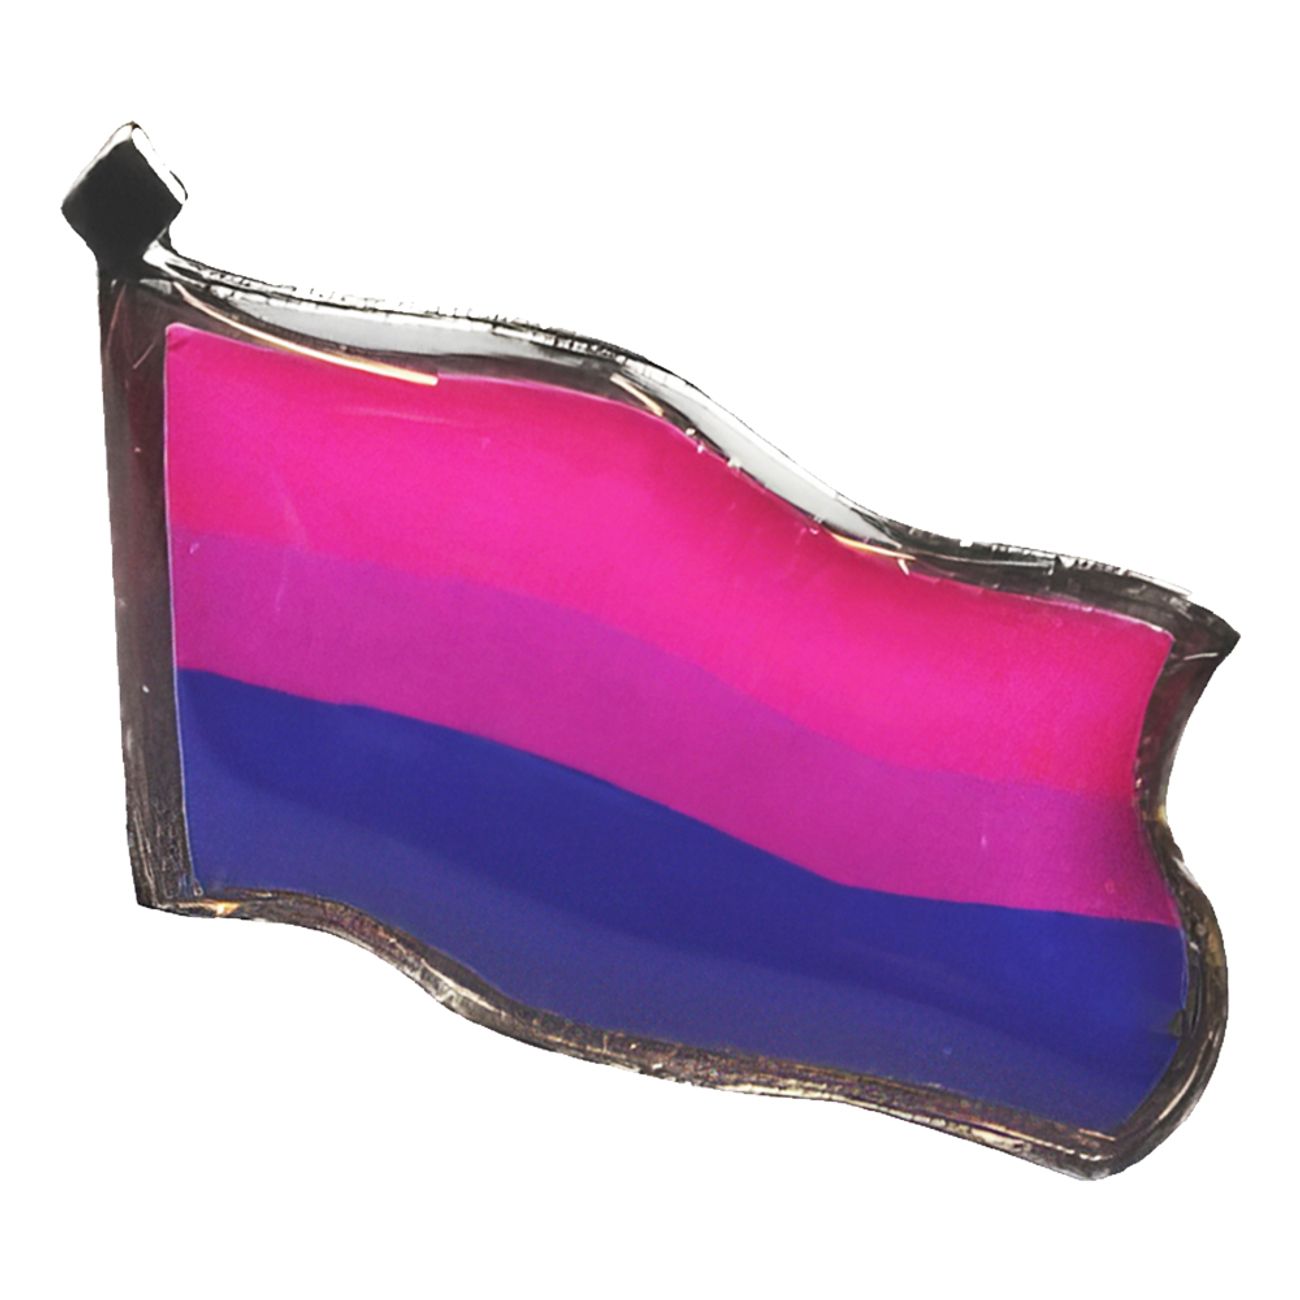 pinflagga-pride-bisexuell-96108-1